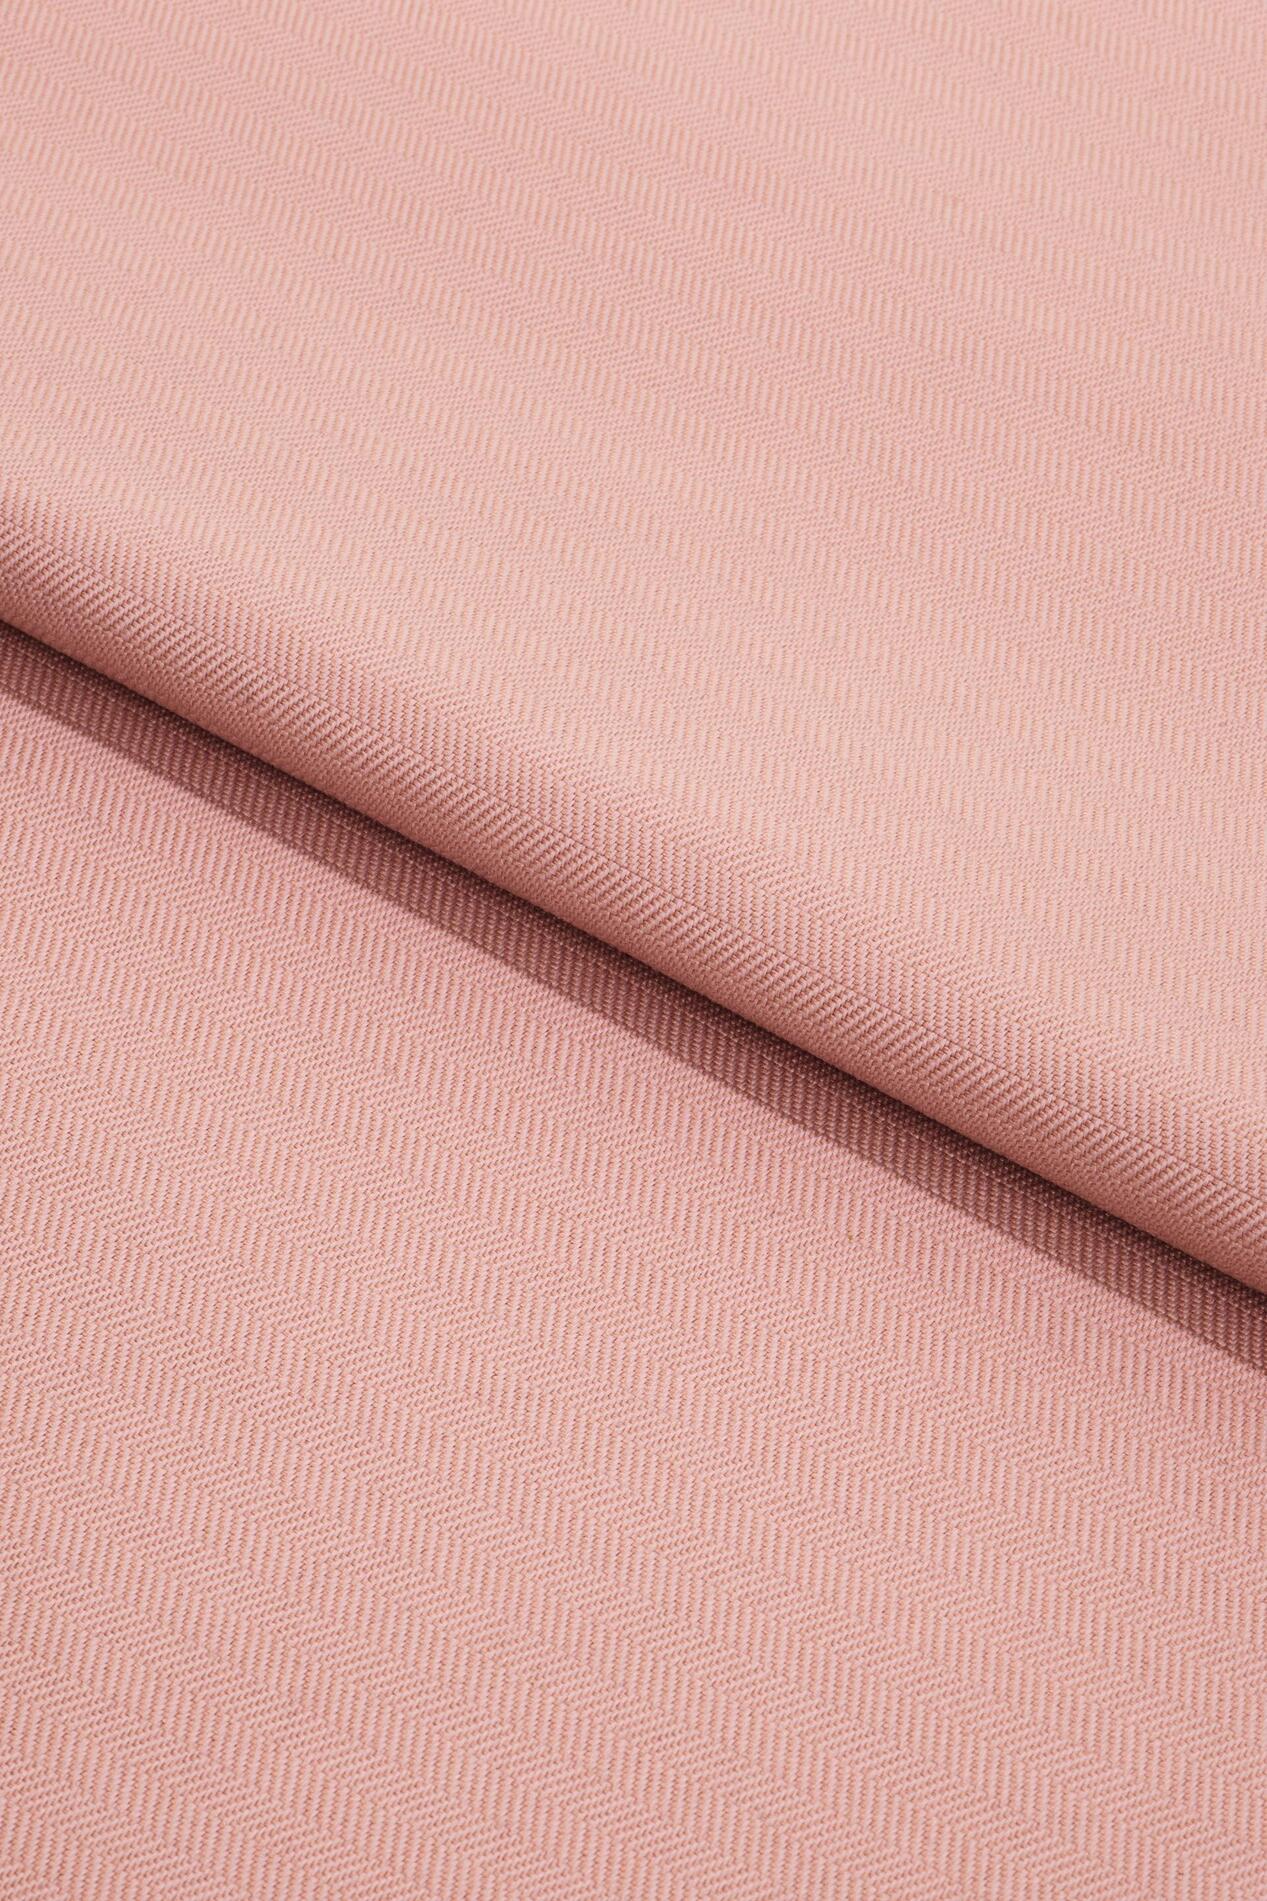 Kvadrat-​Broken-Twill-Weave-Upholstery-Fabric.jpg